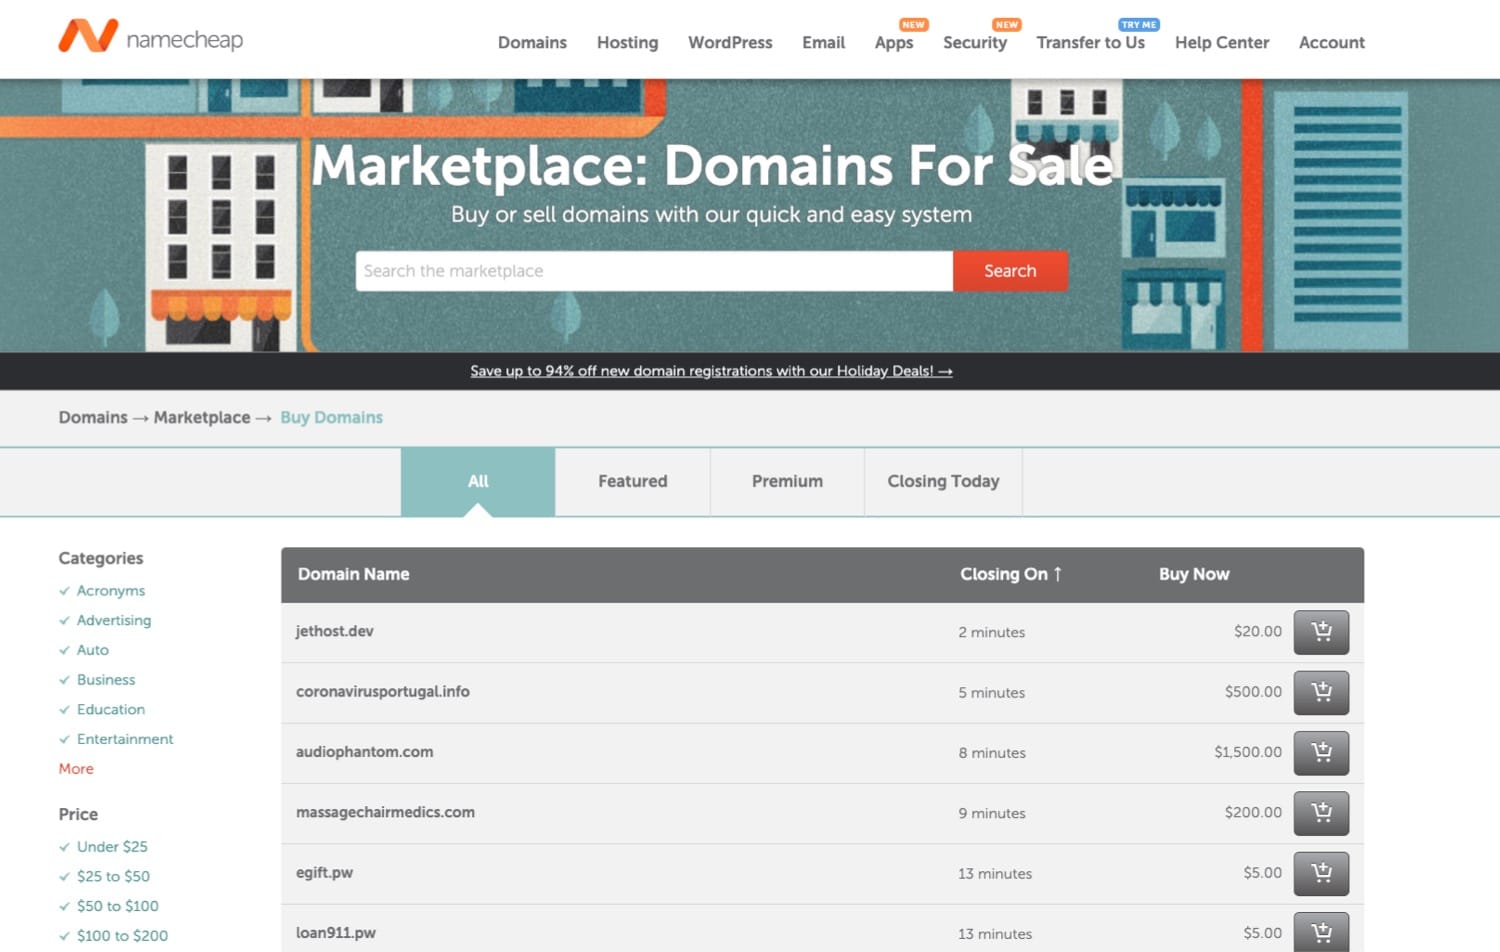 Namecheap's domains marketplace